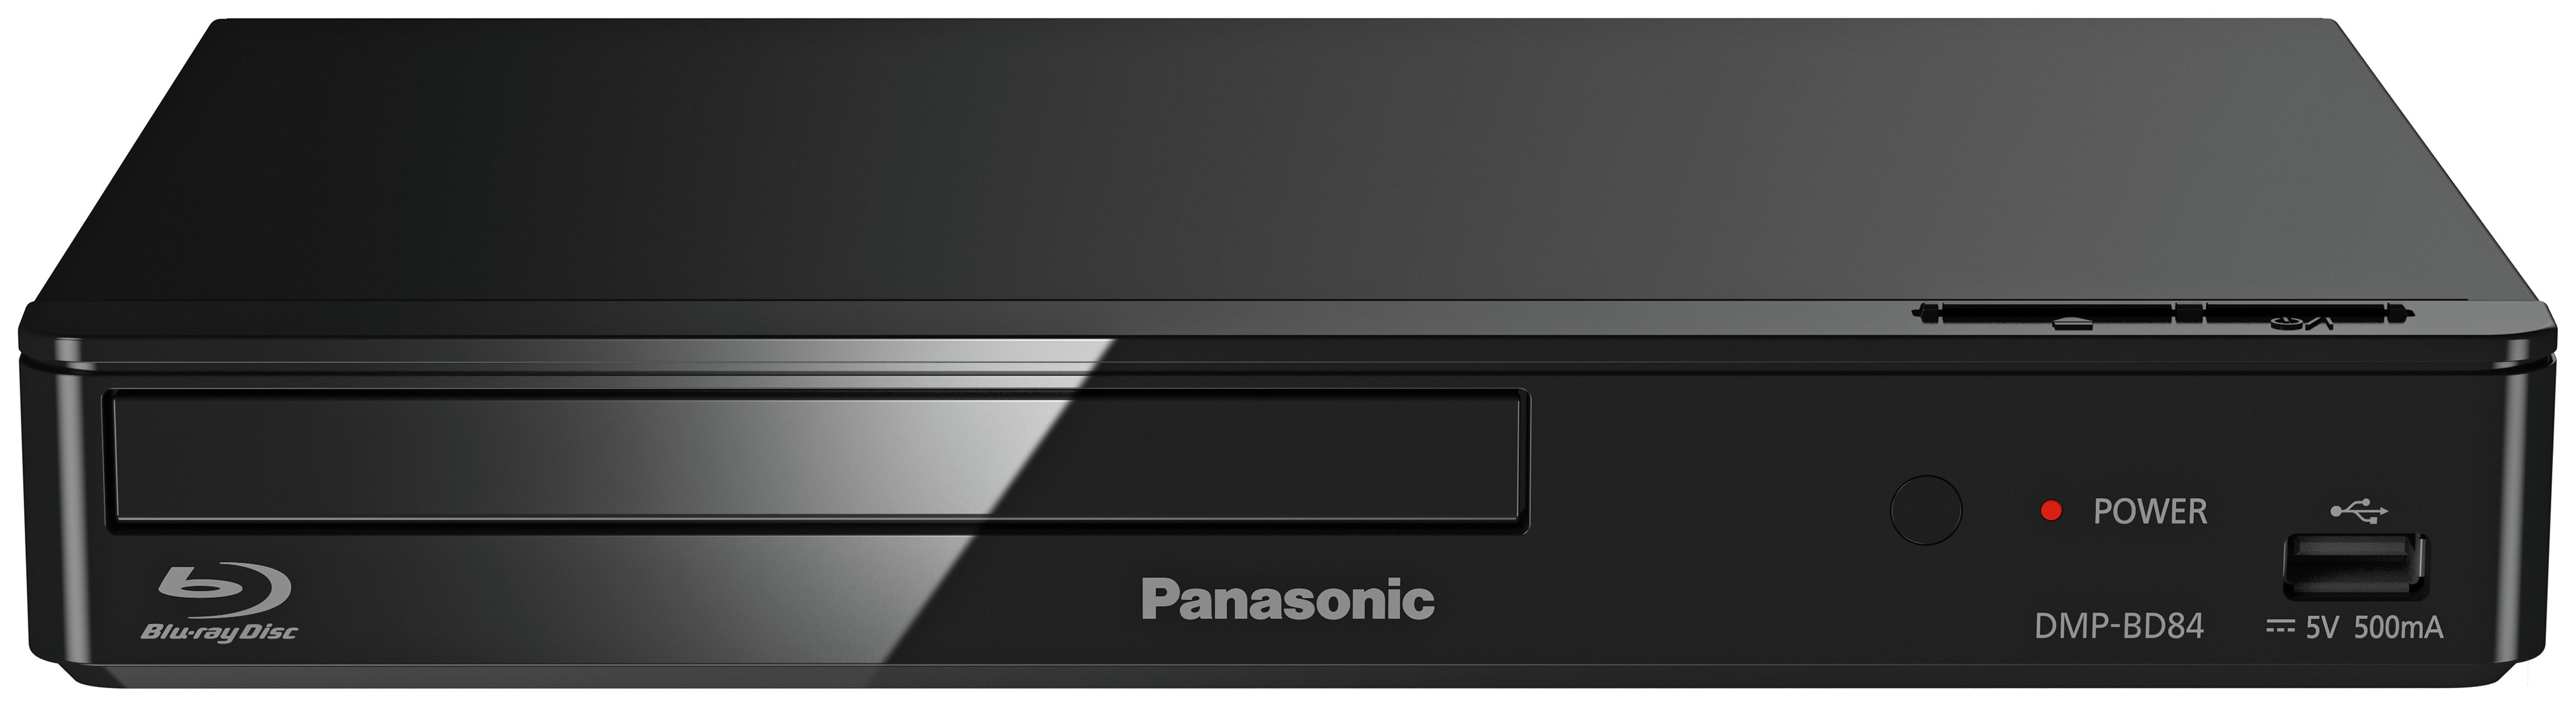 Panasonic DMP BD84EBK - Smart Blu-ray Player.